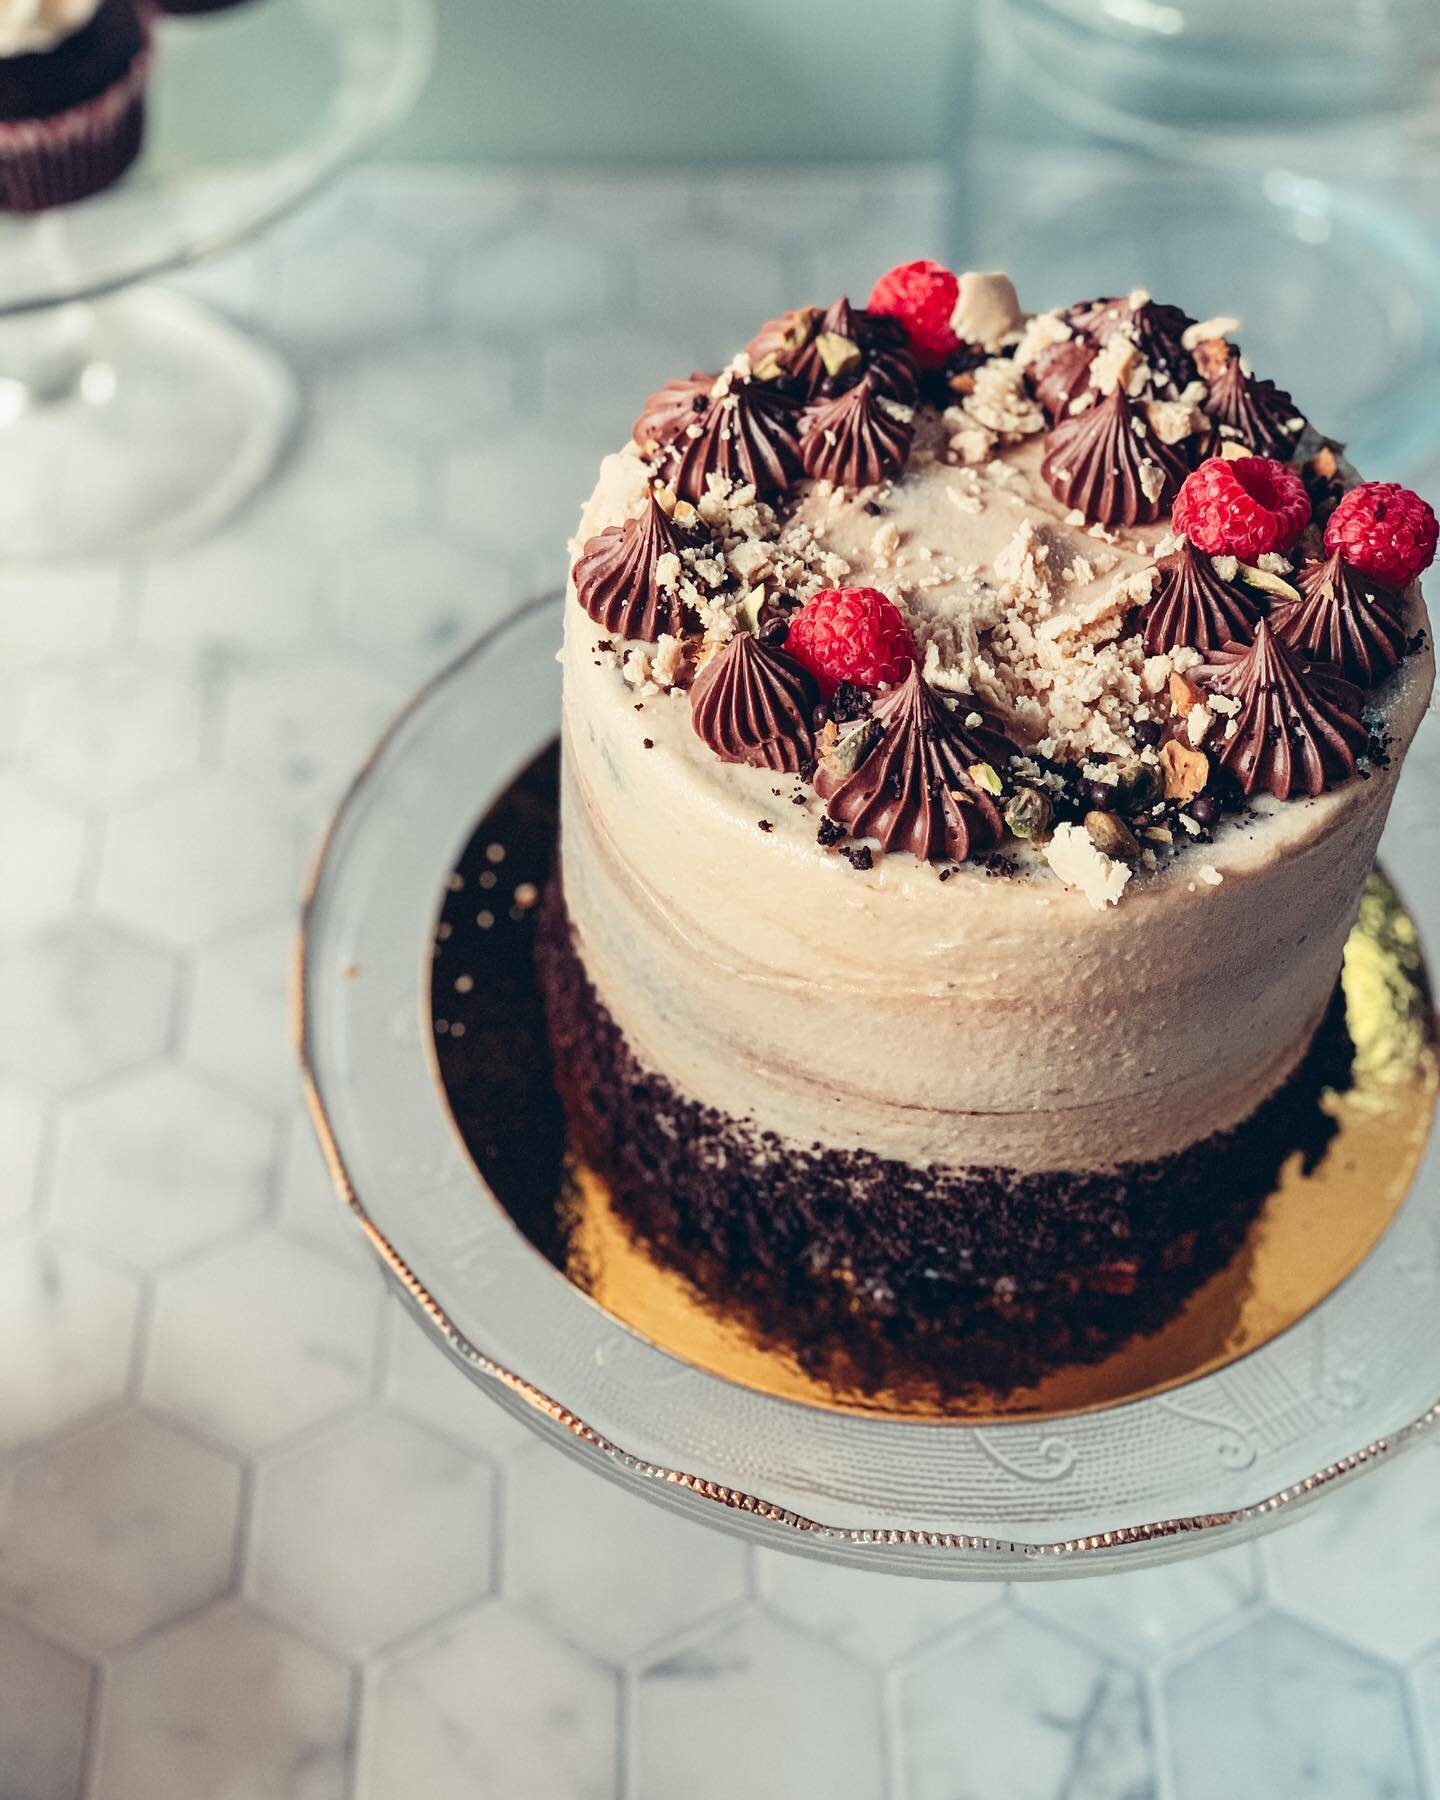 HALVA CAKE 

.

.

#cake #instacake #nelsonbc #kootenays #bakery #bakerylife #lovemyjob #cakesofig #cakesofinstagram #cakesofinsta #yum #delish #sweet #dessert #halva #tahini #pistachio #ganache #glutenfree #happybirthday #chocolatecake